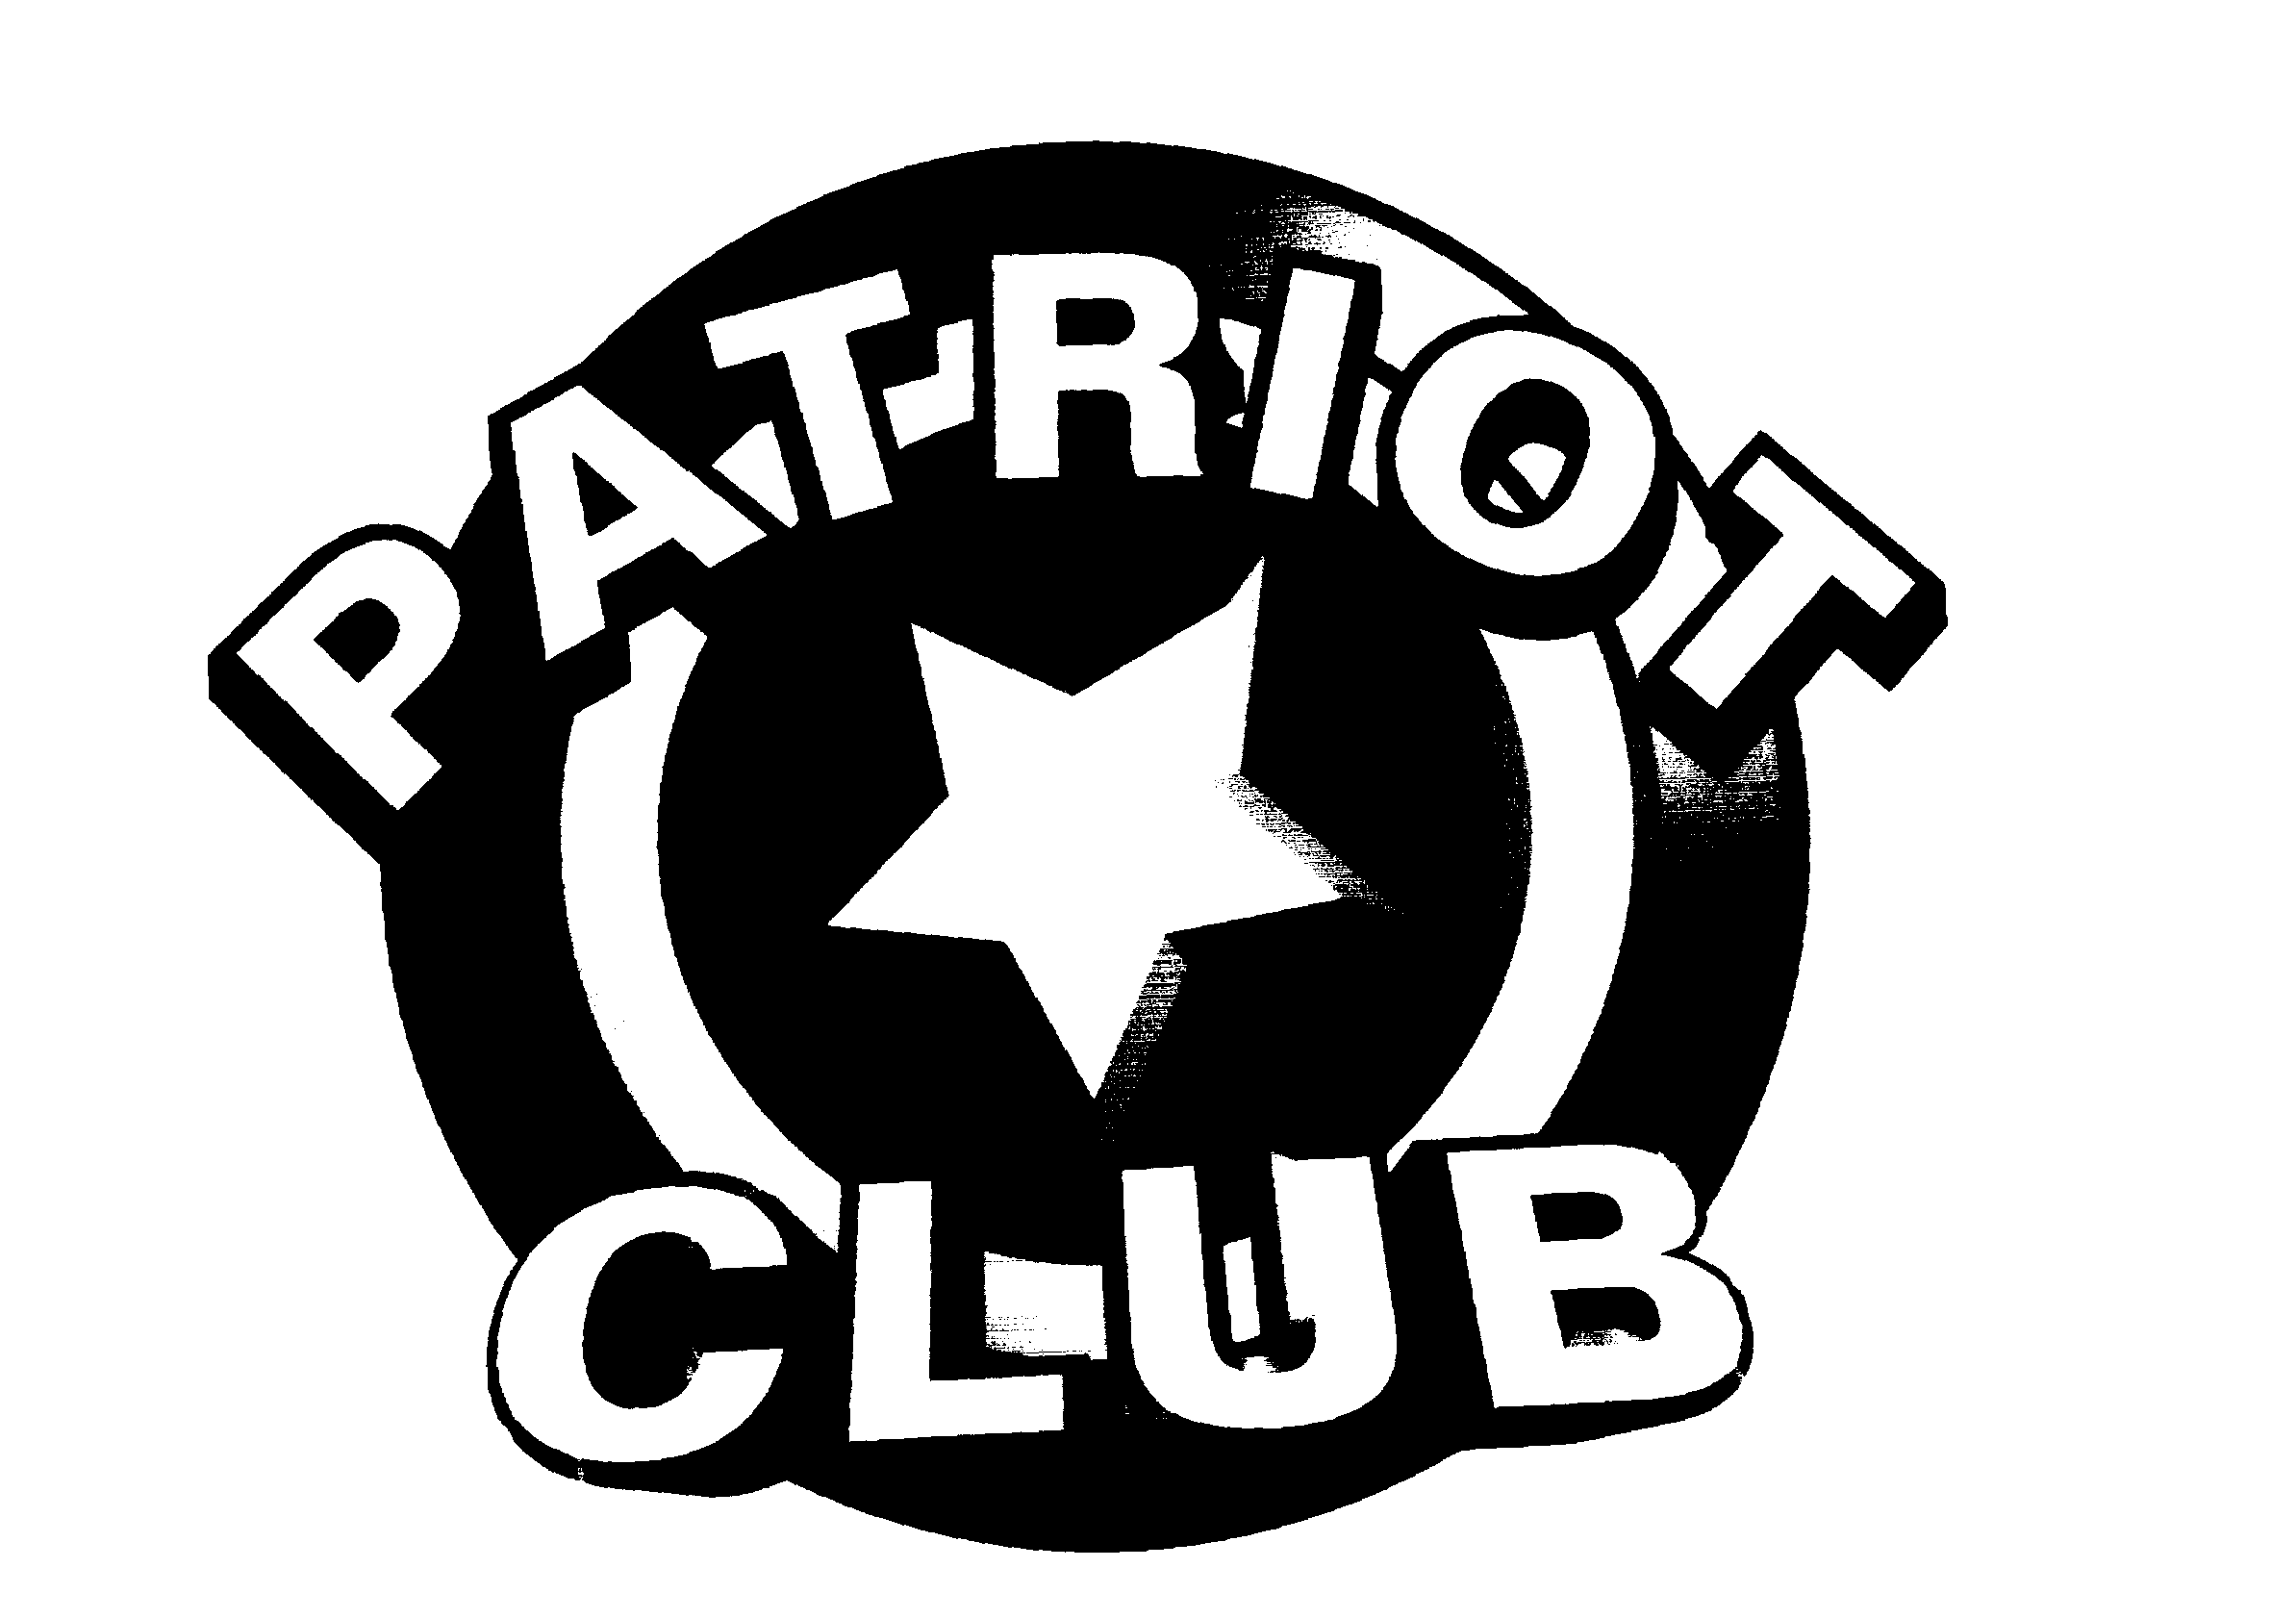 PATRIOT CLUB